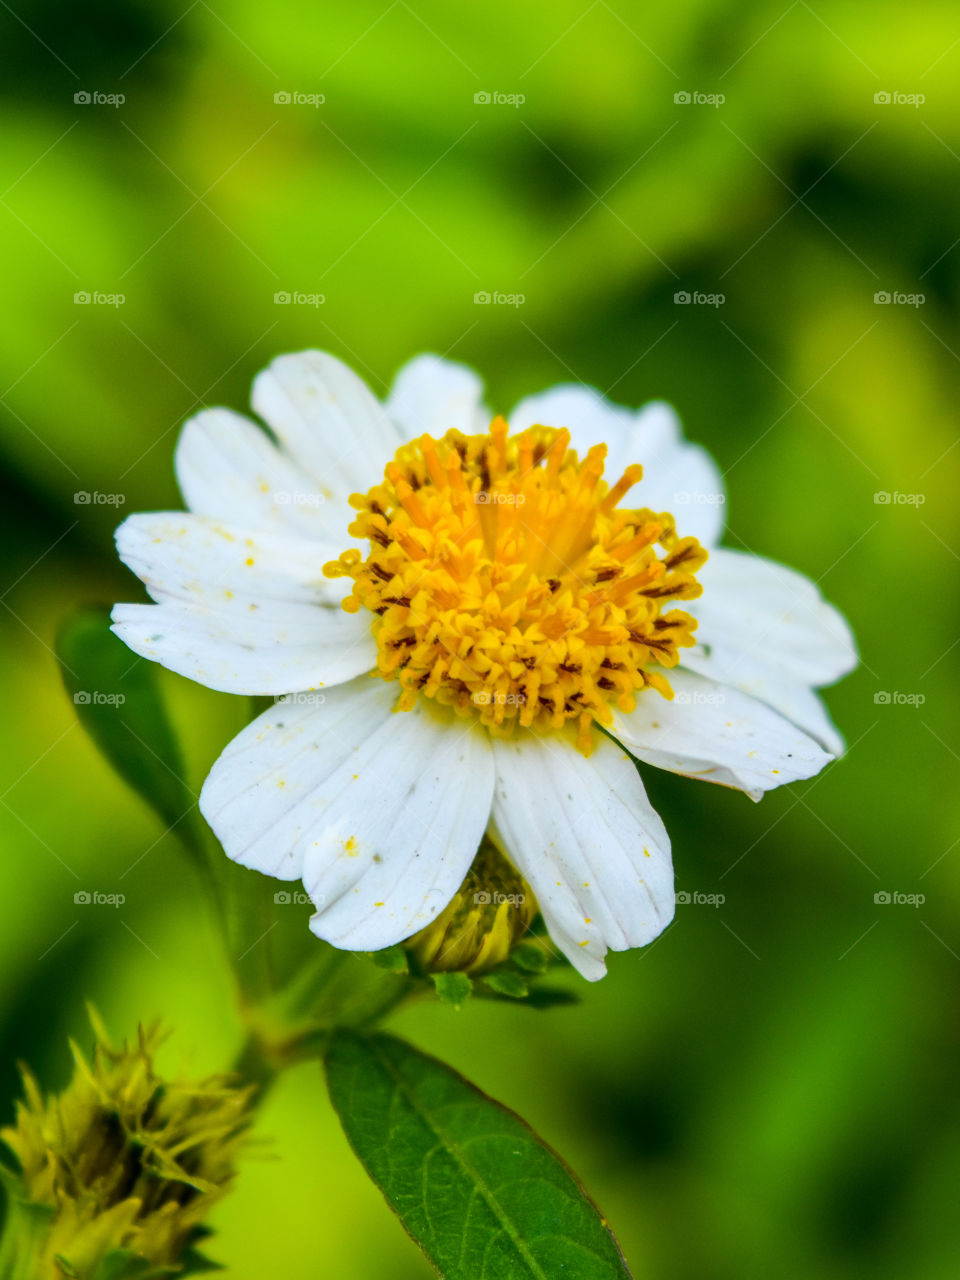 A Little White Flower